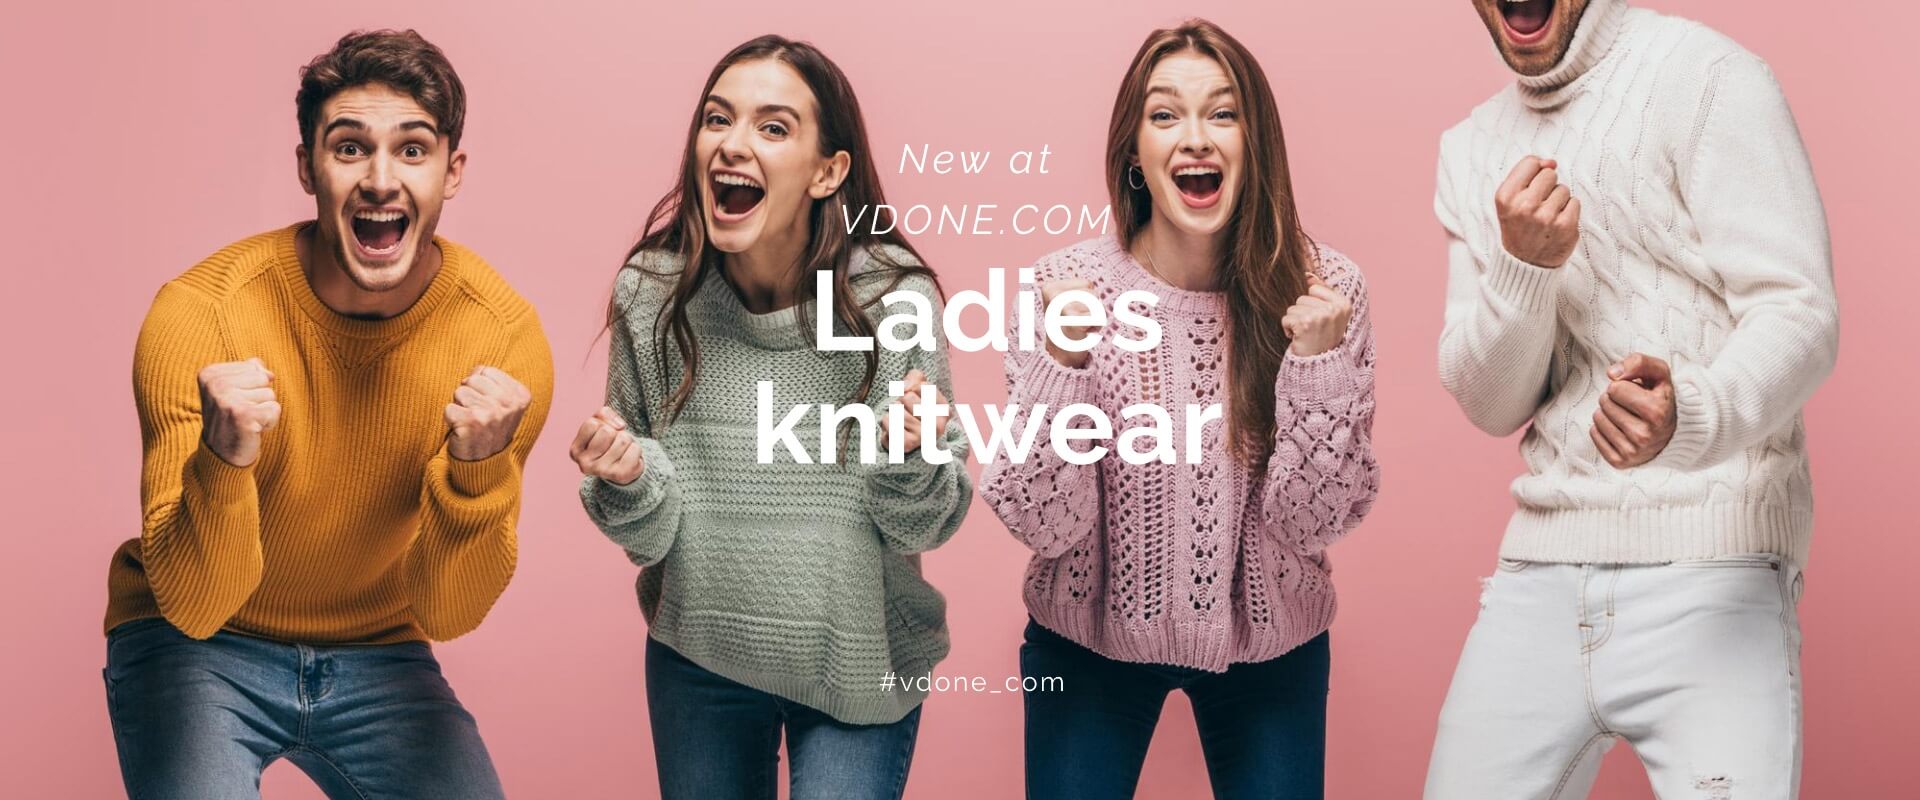 Ladies-knitwear-uk